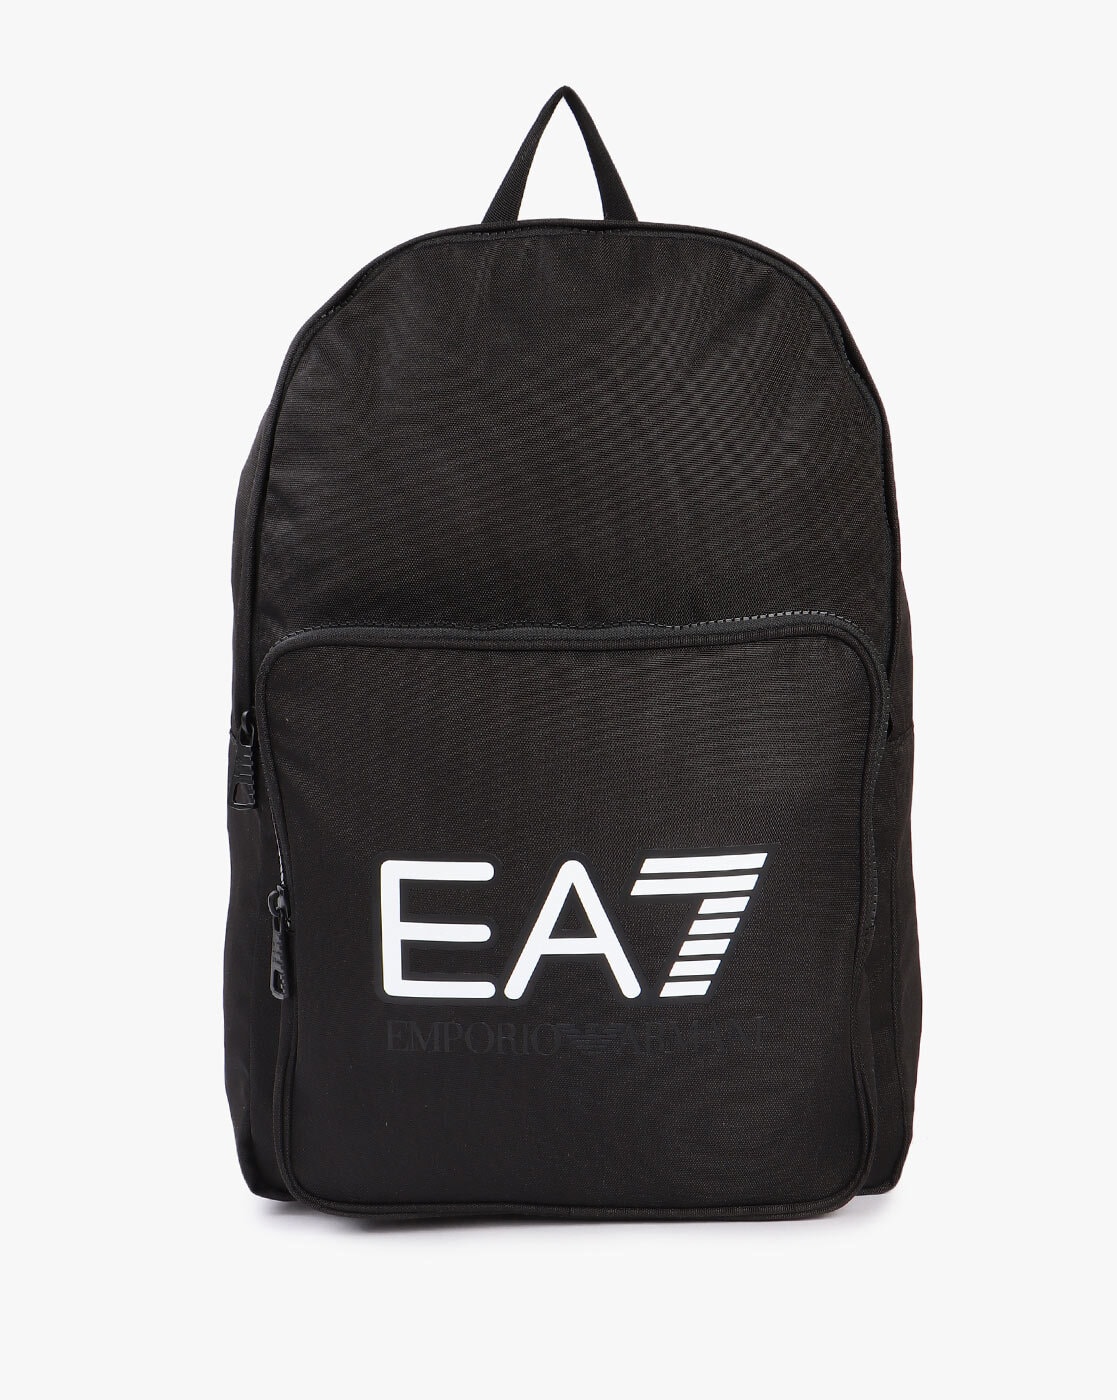 Emporio Armani EA7 mini flight bag in black | ASOS